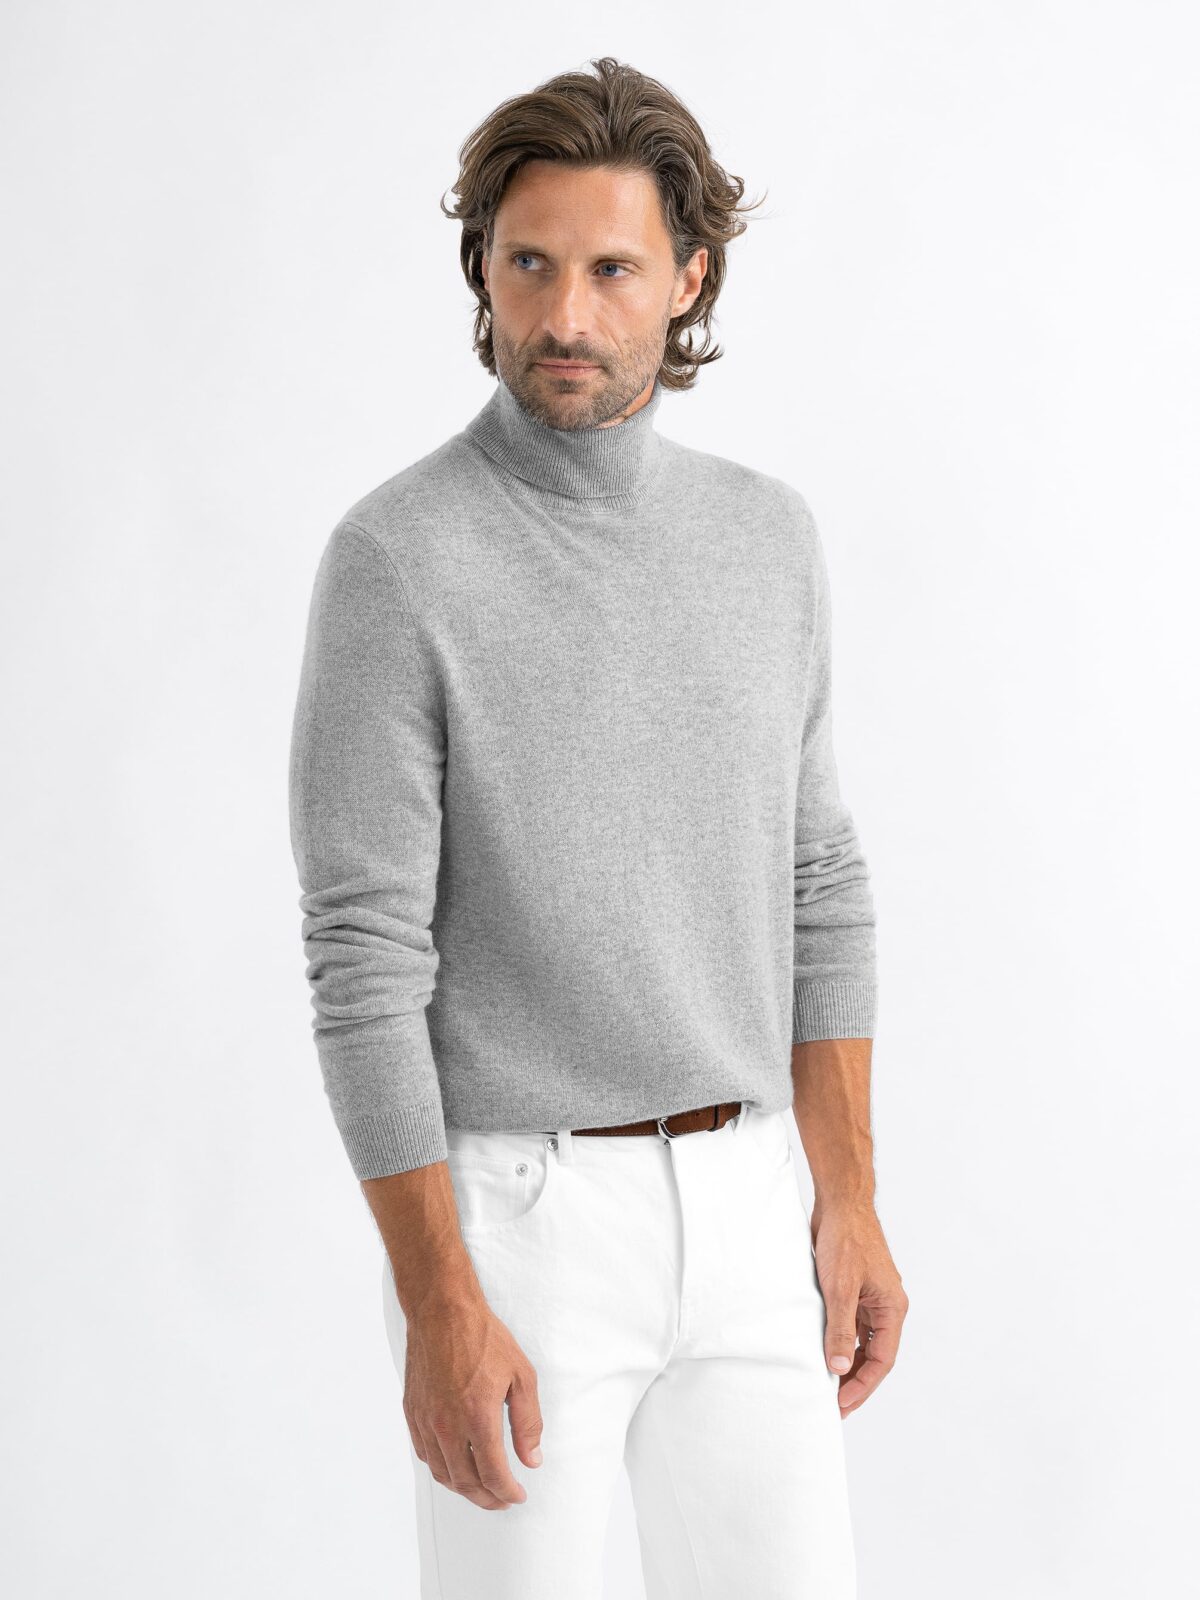 Short sleeve jumper 100% Cashmere in light grey